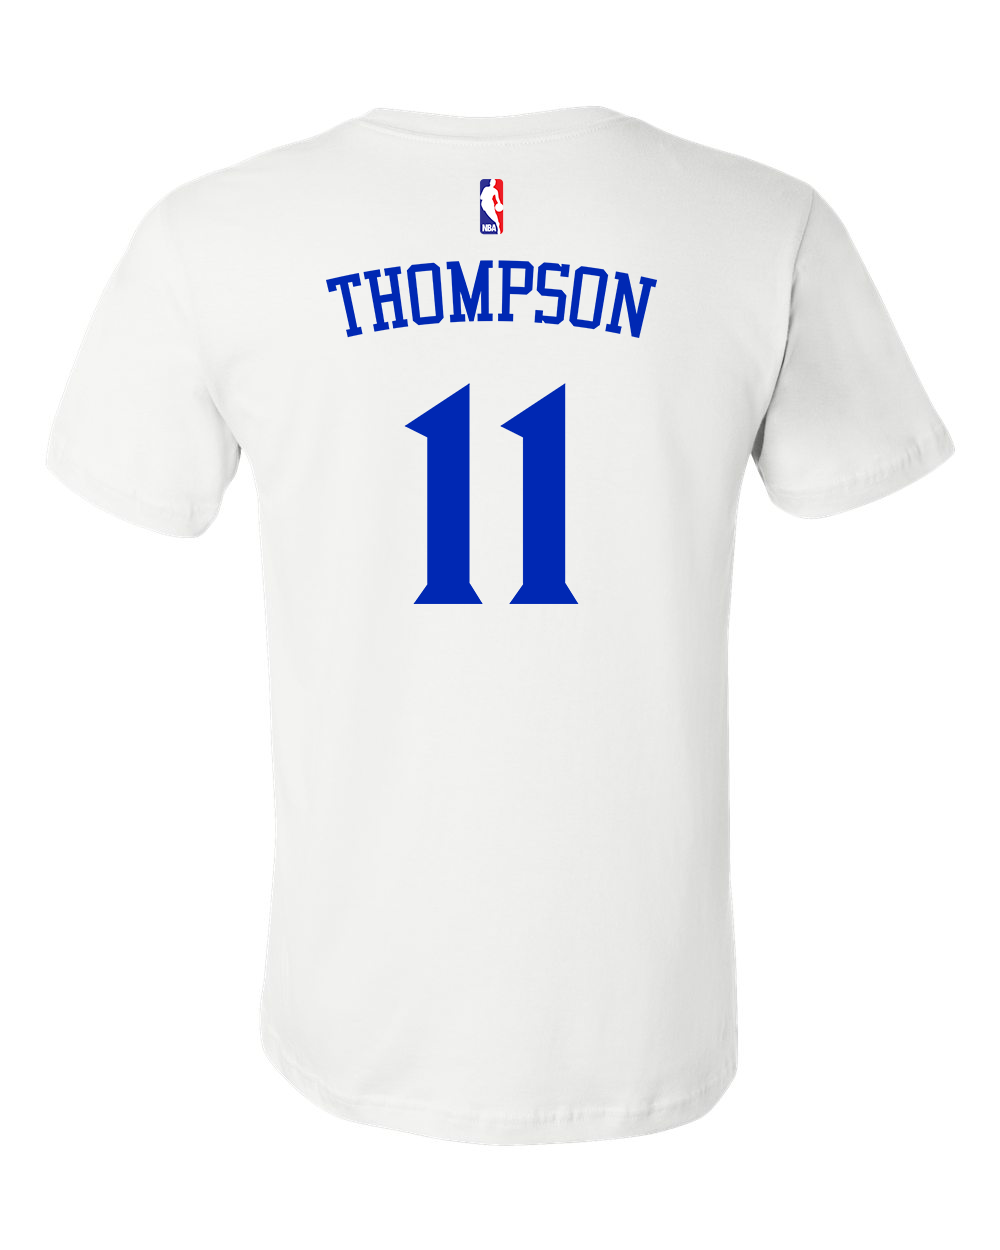 thompson jersey